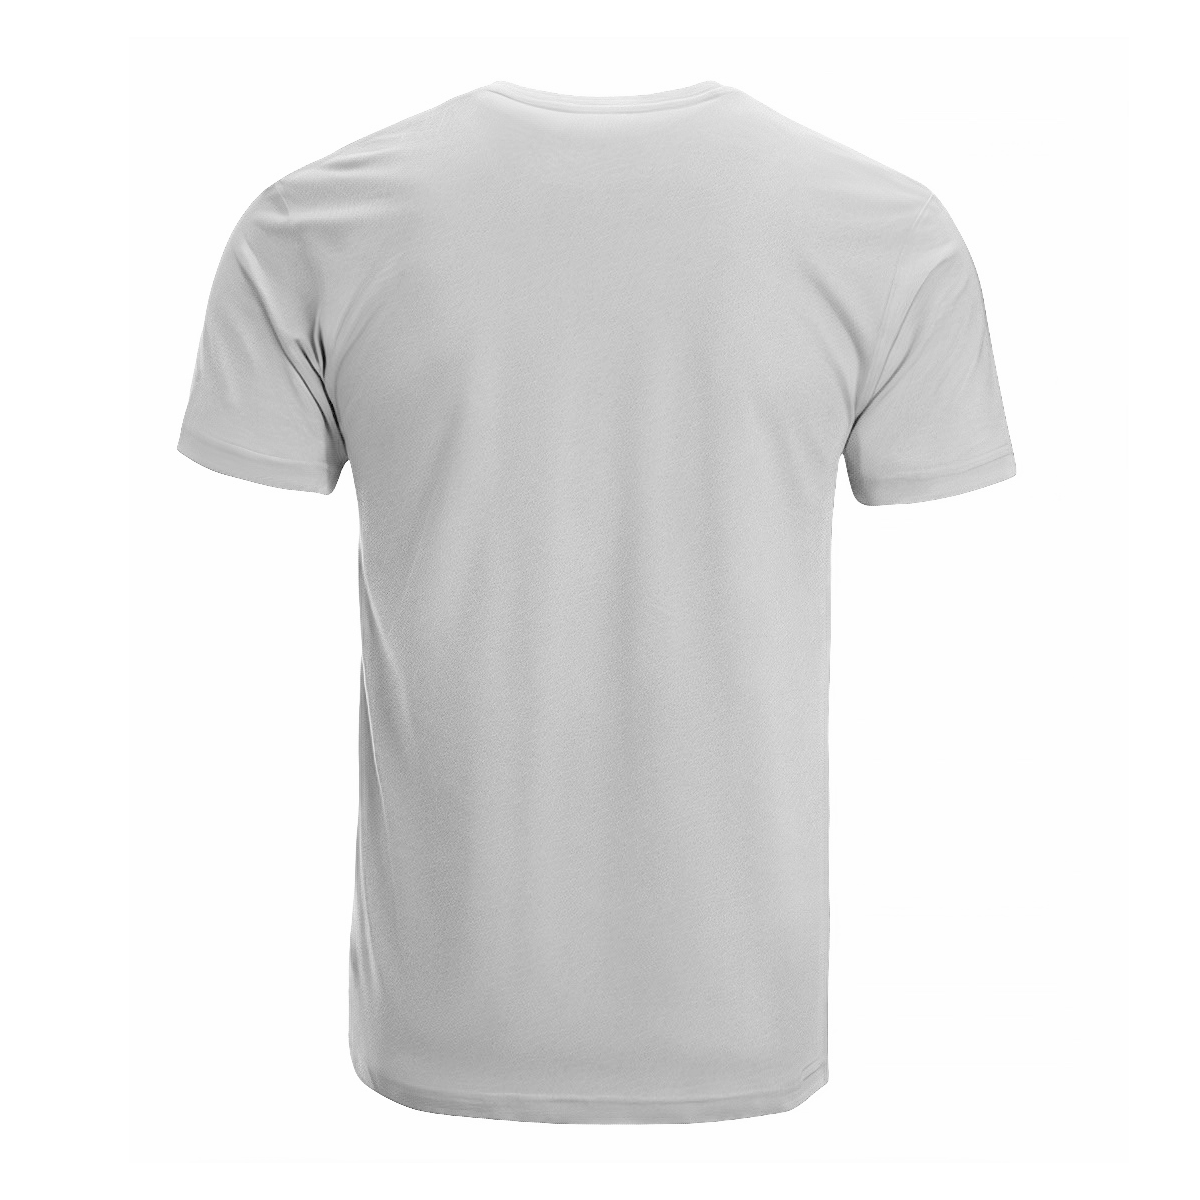 Chattan Tartan Crest T-shirt - I'm not yelling style